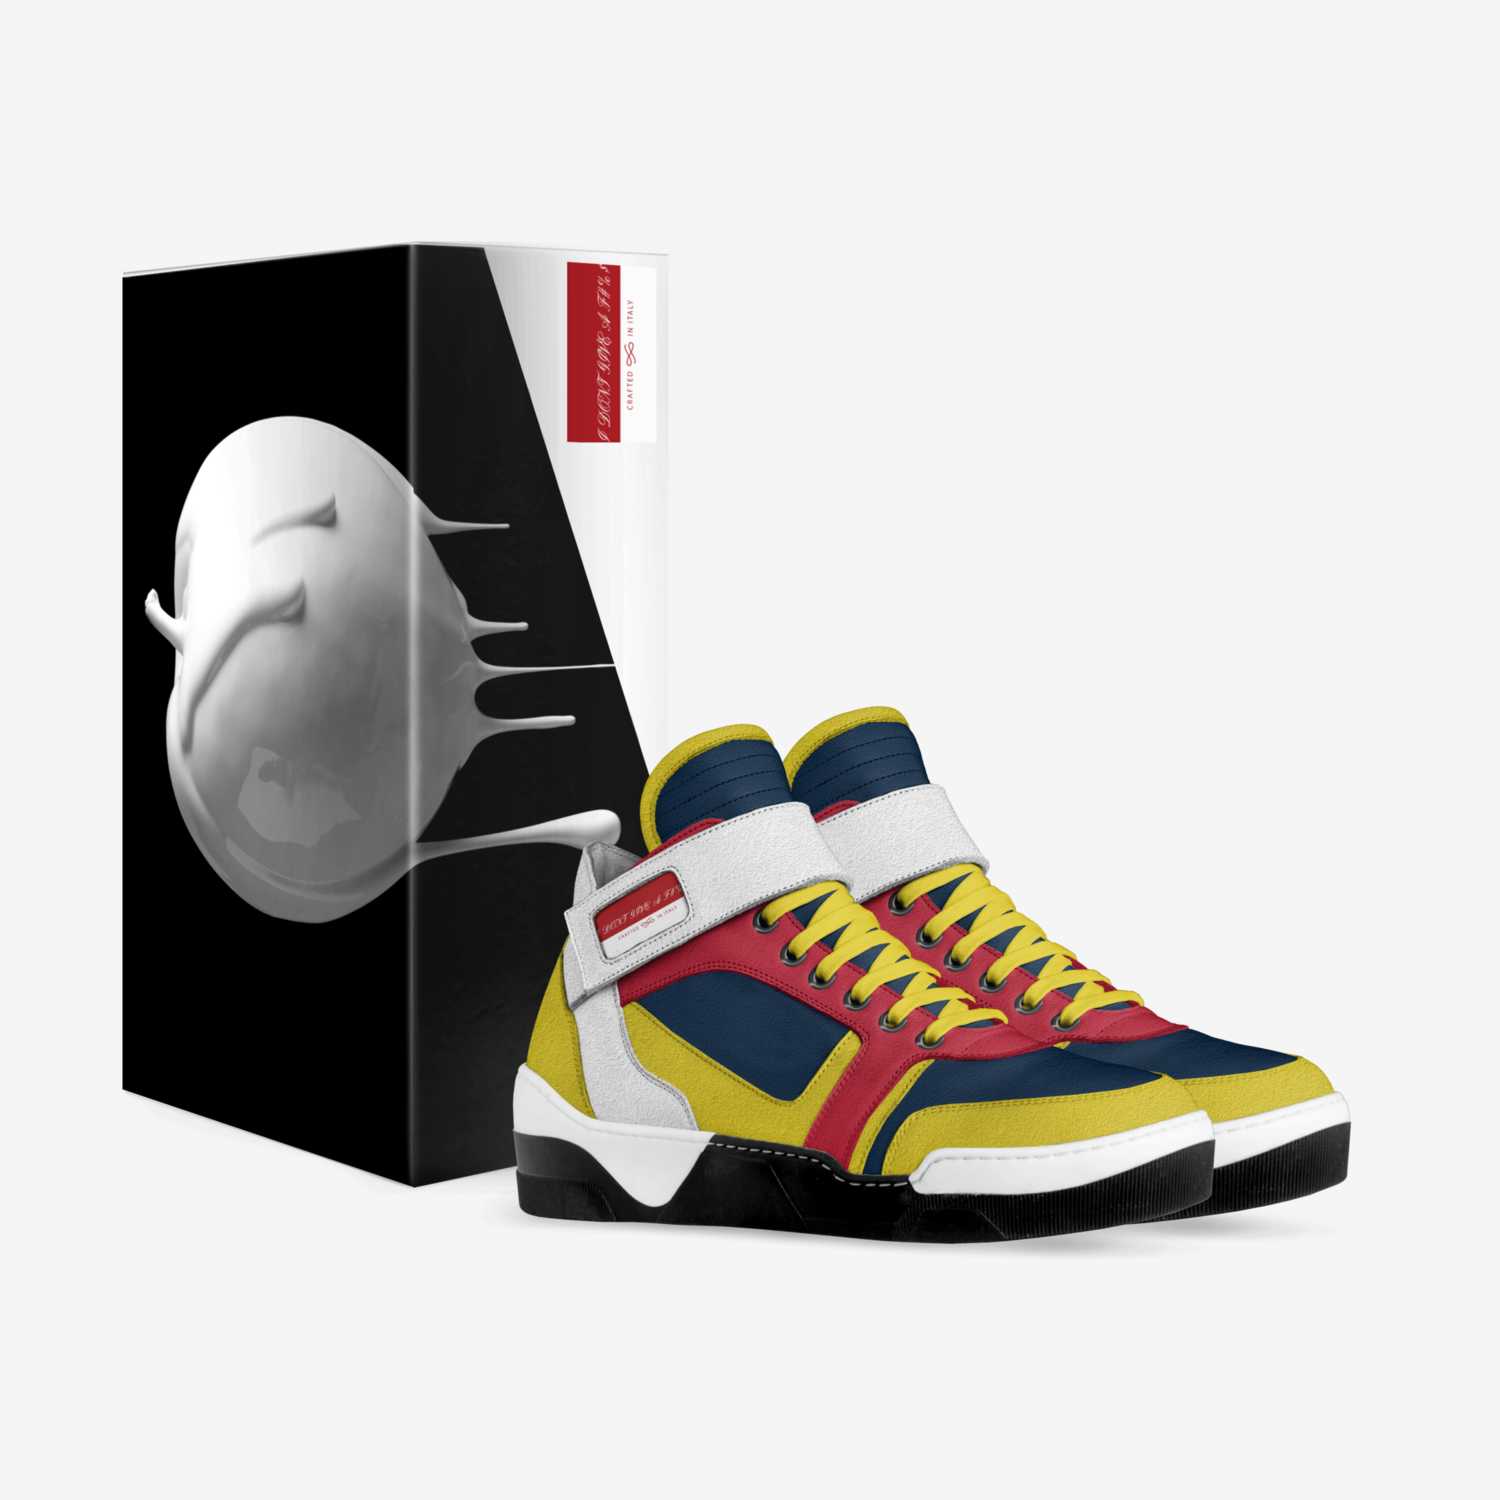 IDGAF custom made in Italy shoes by Fresha Johnson | Box view